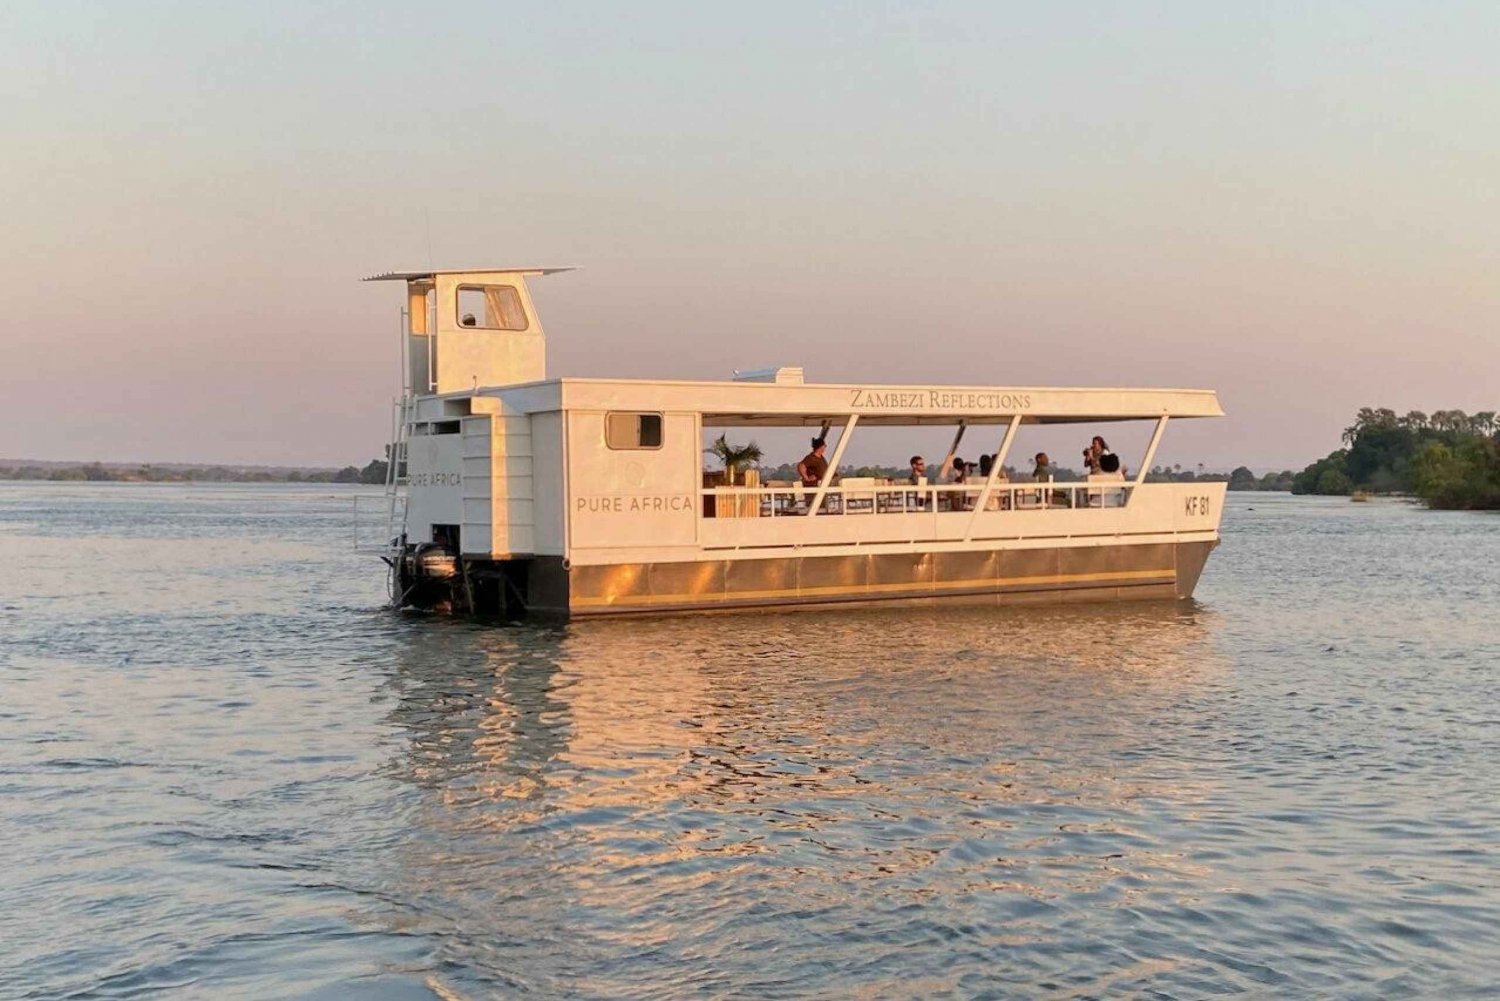 Zambezi River : Luxury Sunset Cruise With 4 Course Dinner